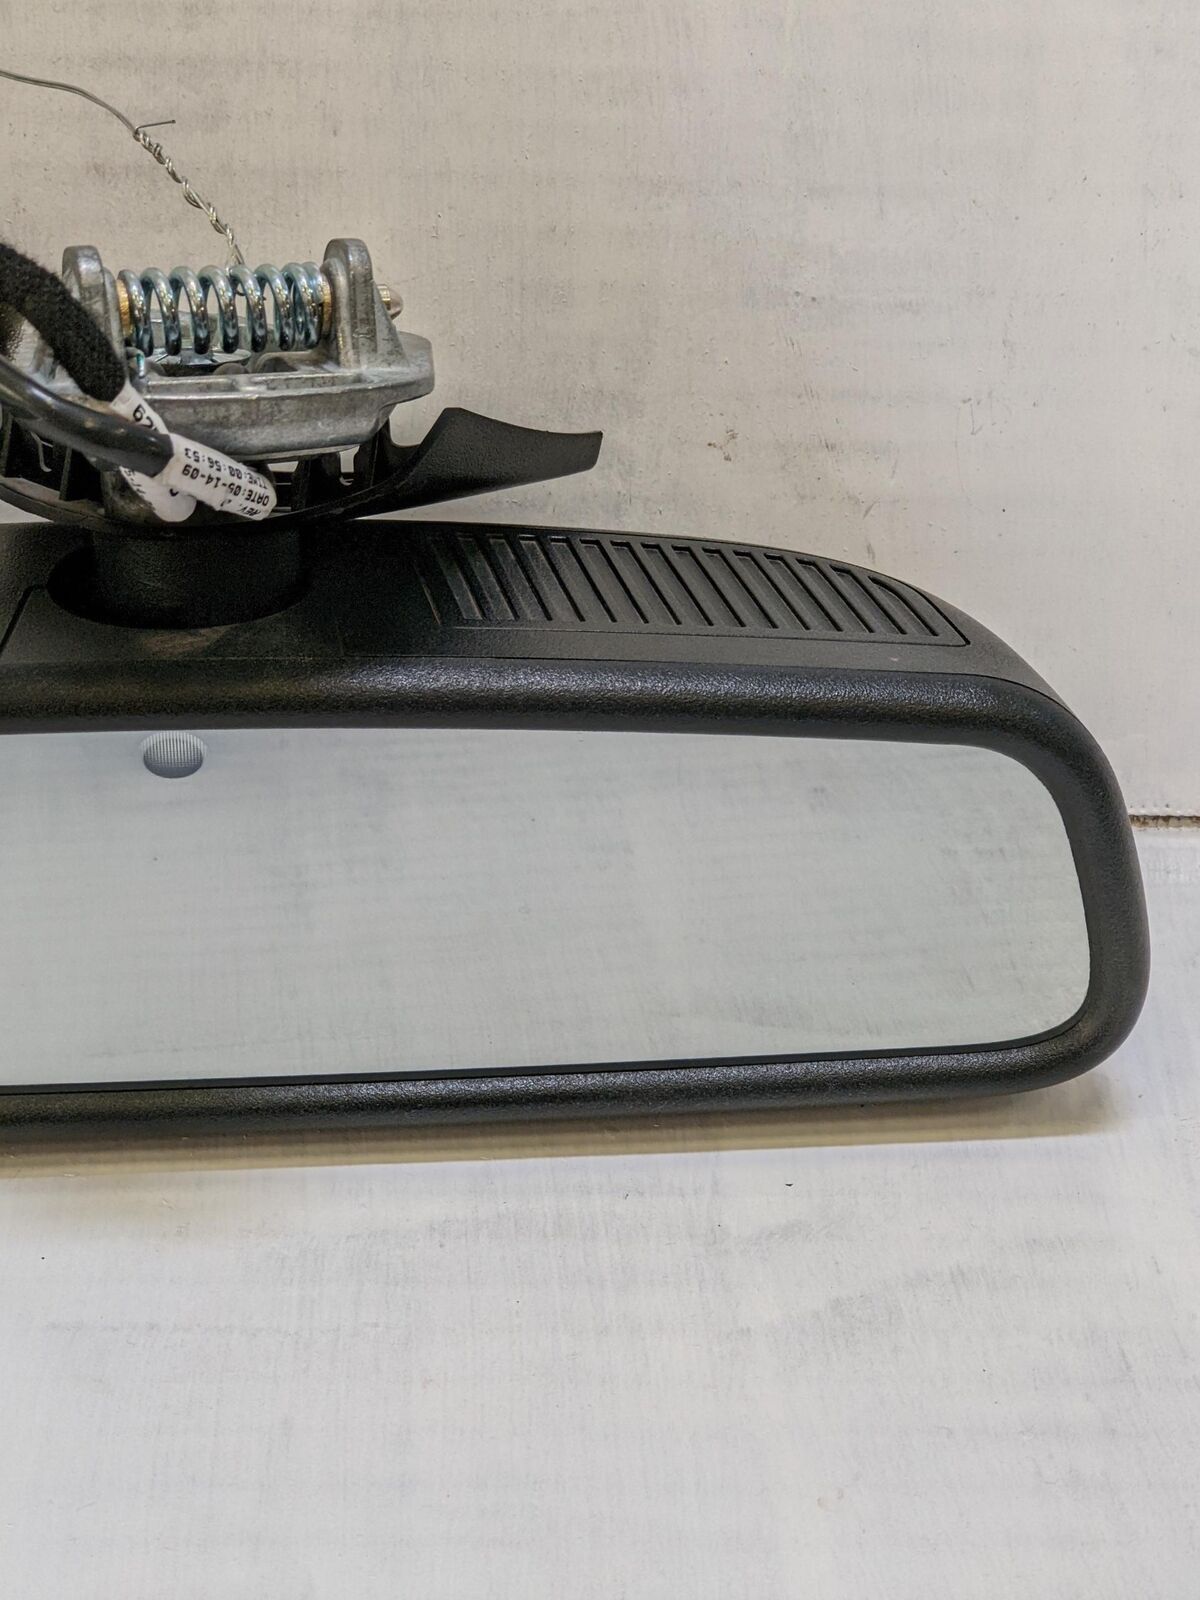 💥10 MERCEDES E350 Rear View Mirror Black Garage Door Opener A2048102617💥